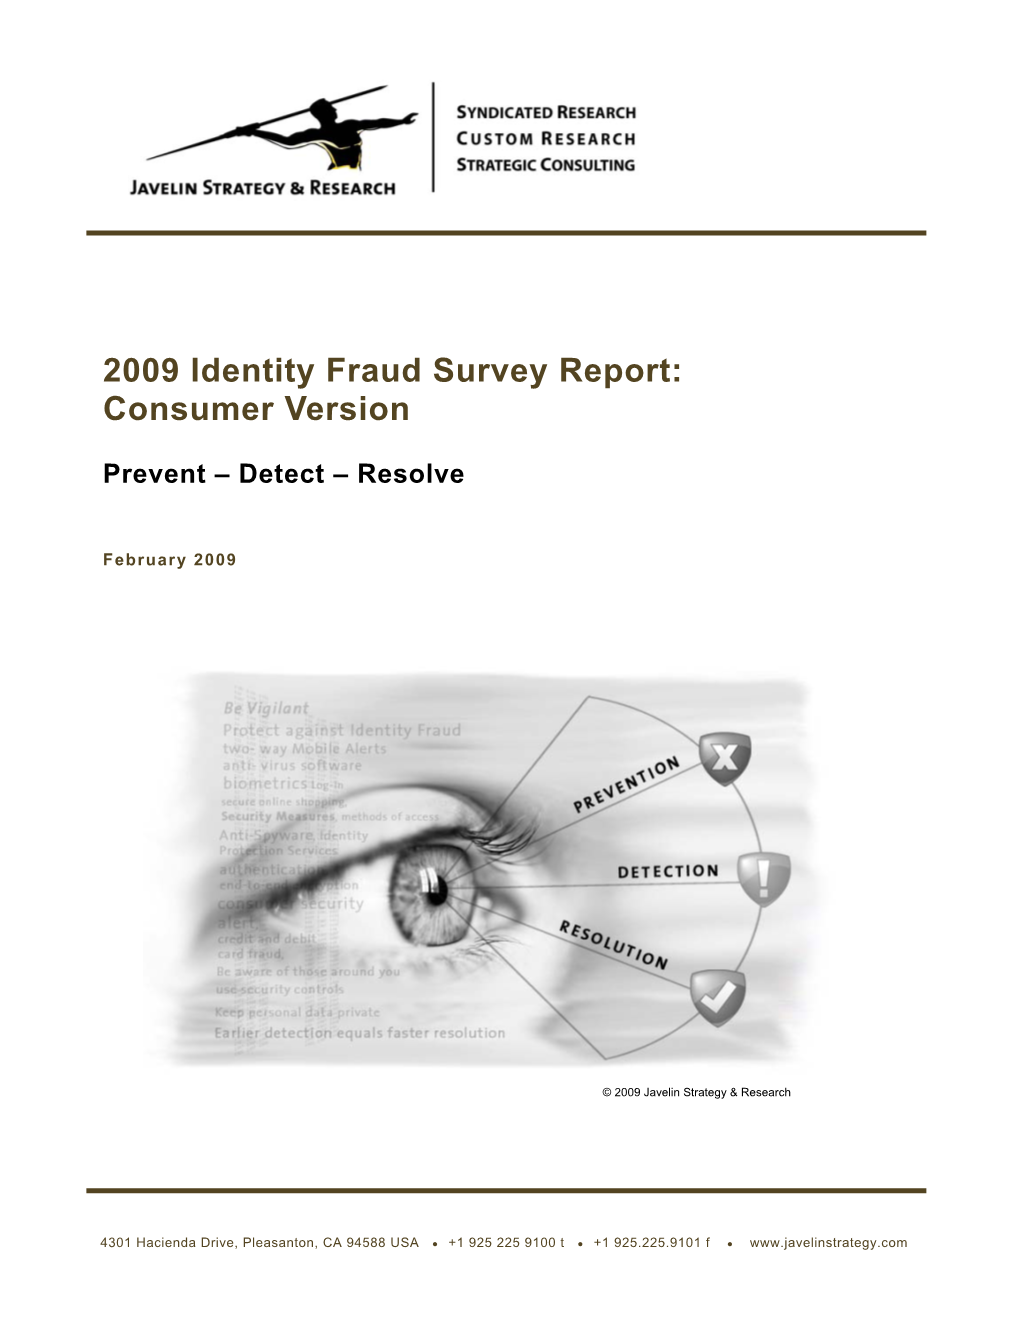 2009 Identity Fraud Survey Report: Consumer Version